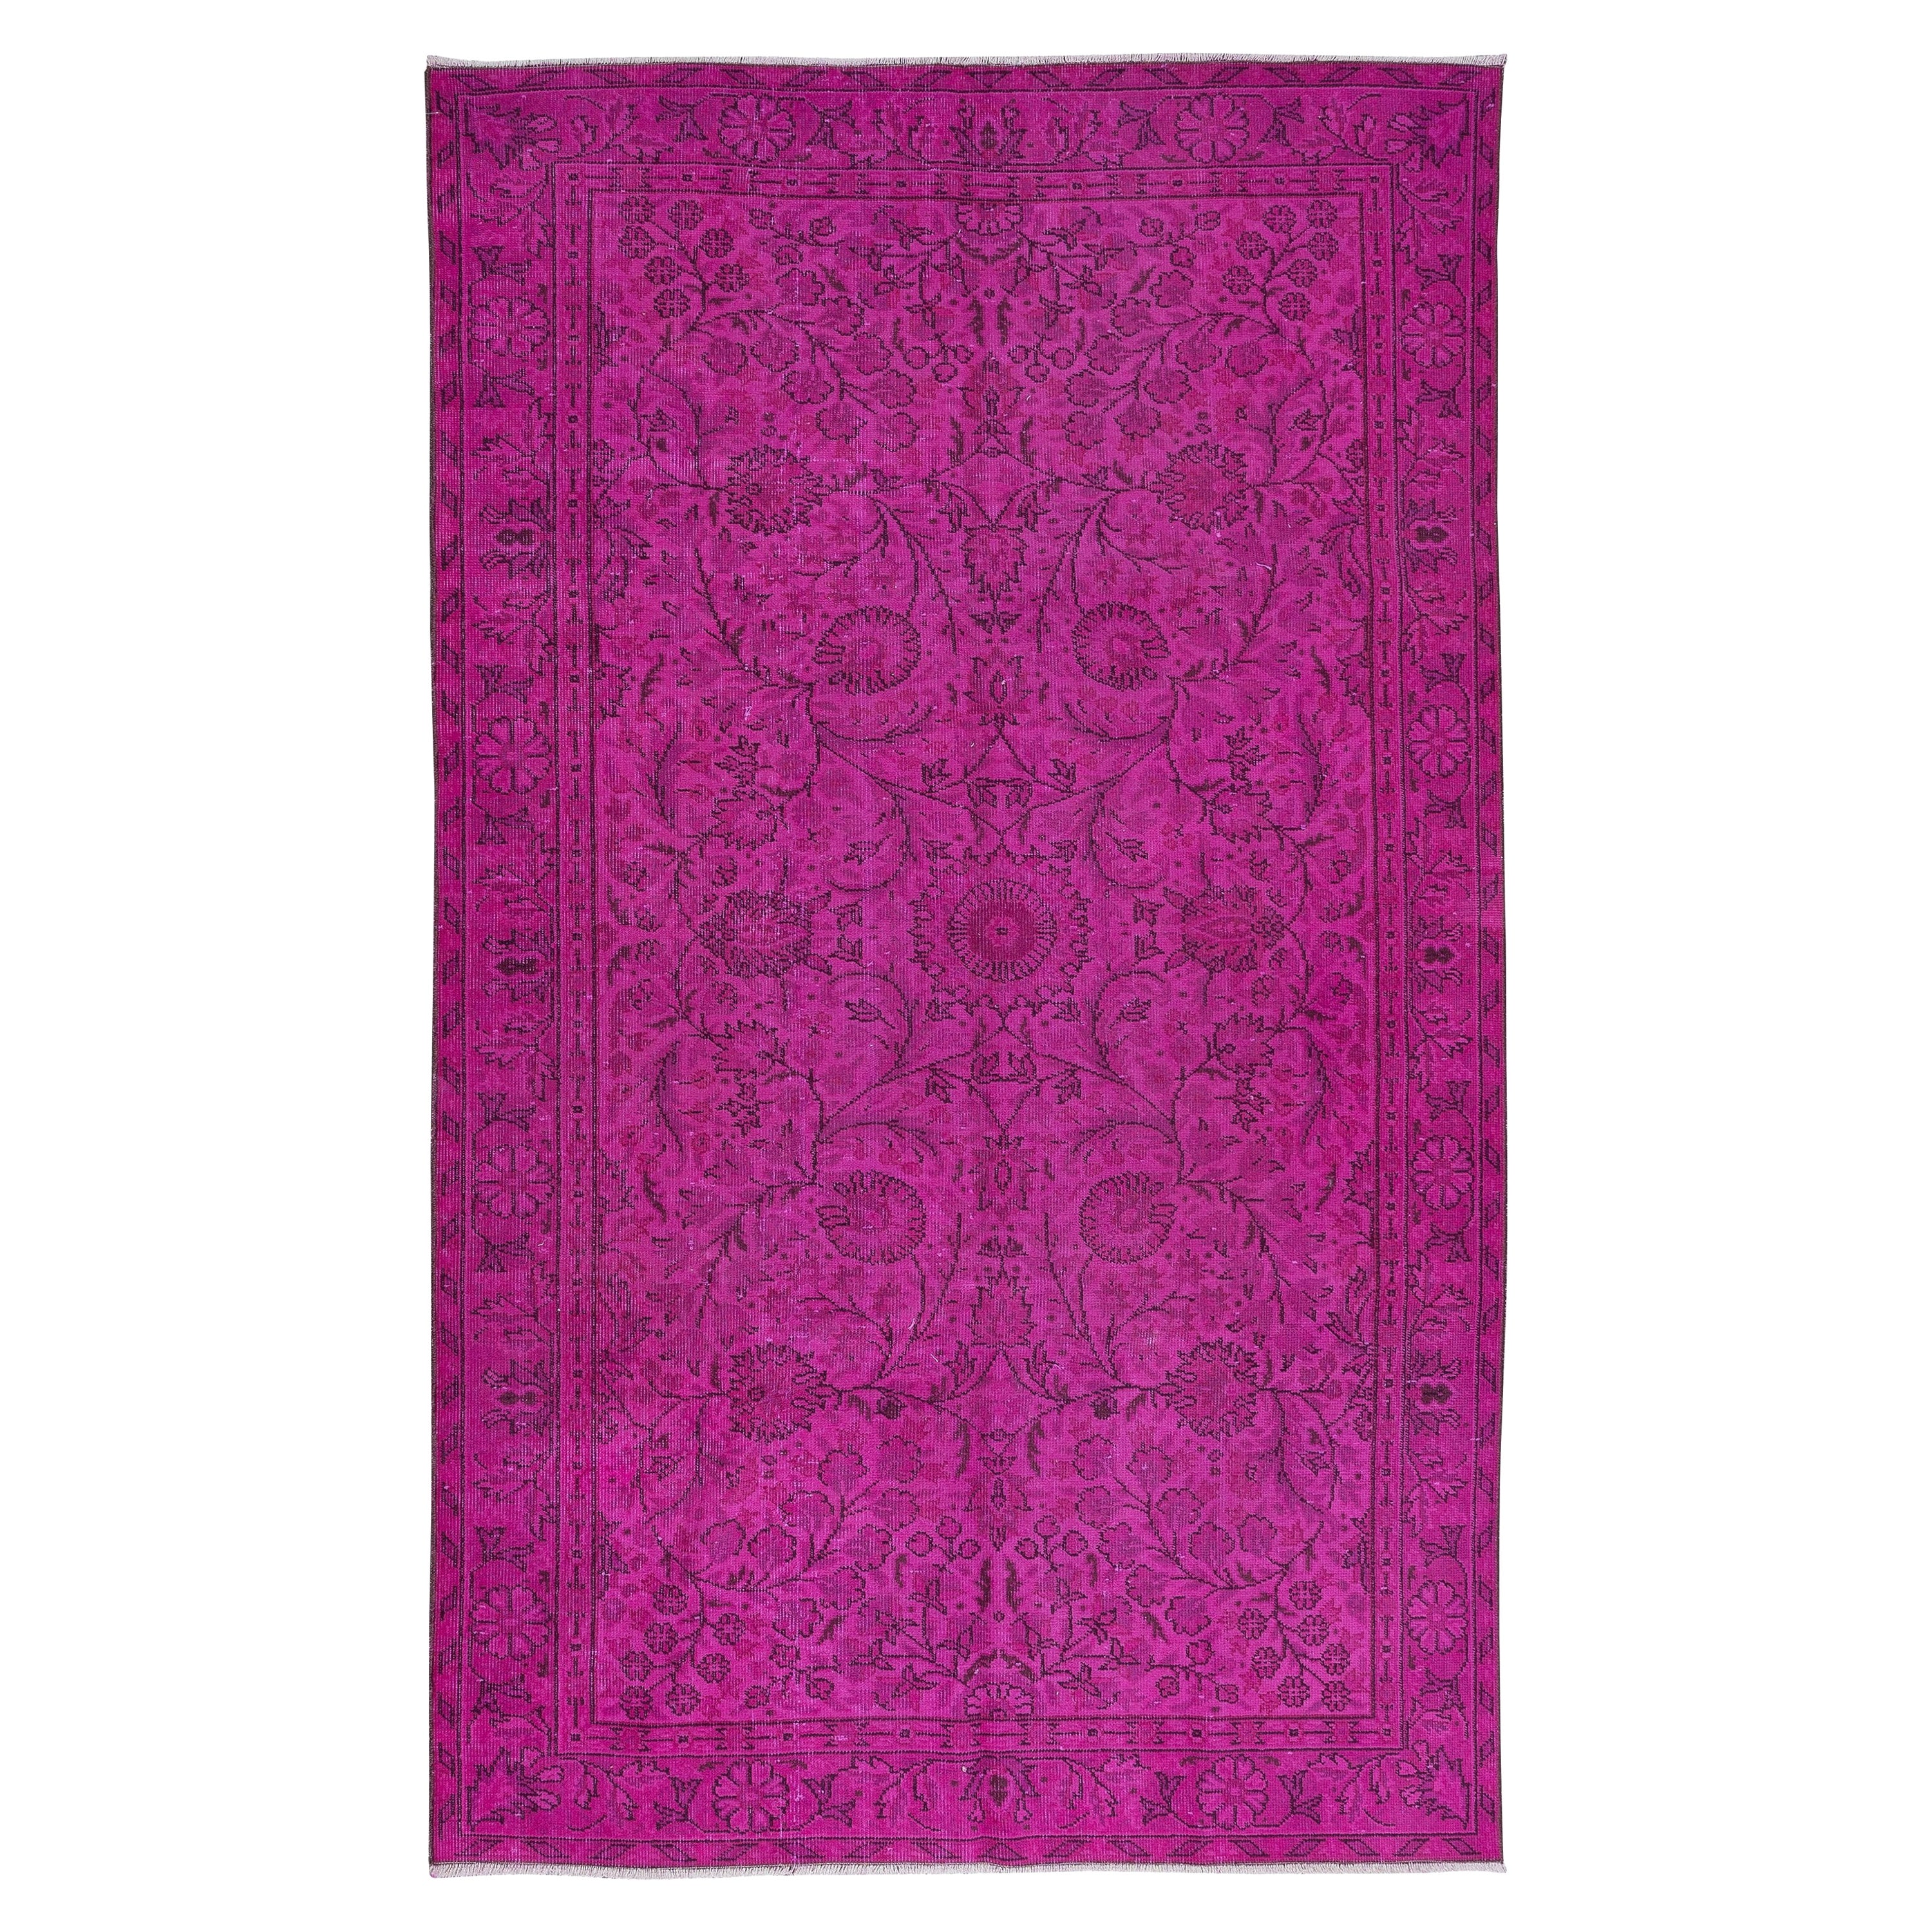 5.3x8.7 Ft Modern Handmade Turkish Vivid Hot Pink Rug with Flower Design